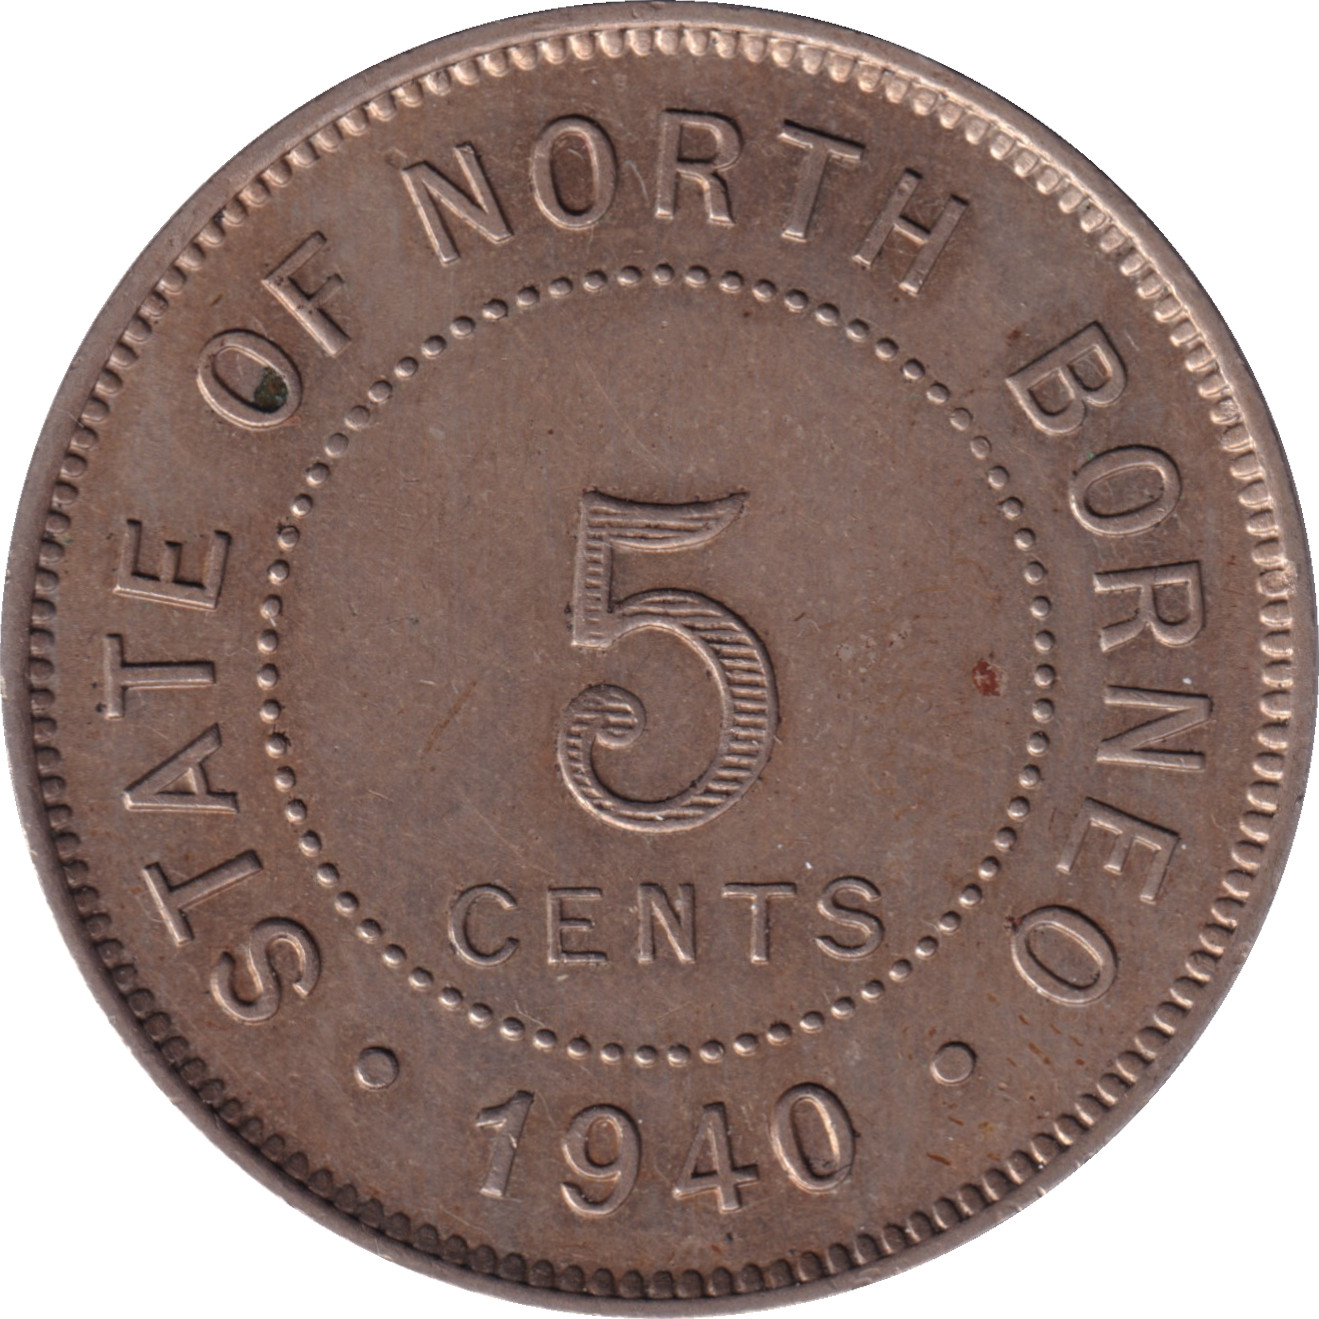 5 cents - Armoiries